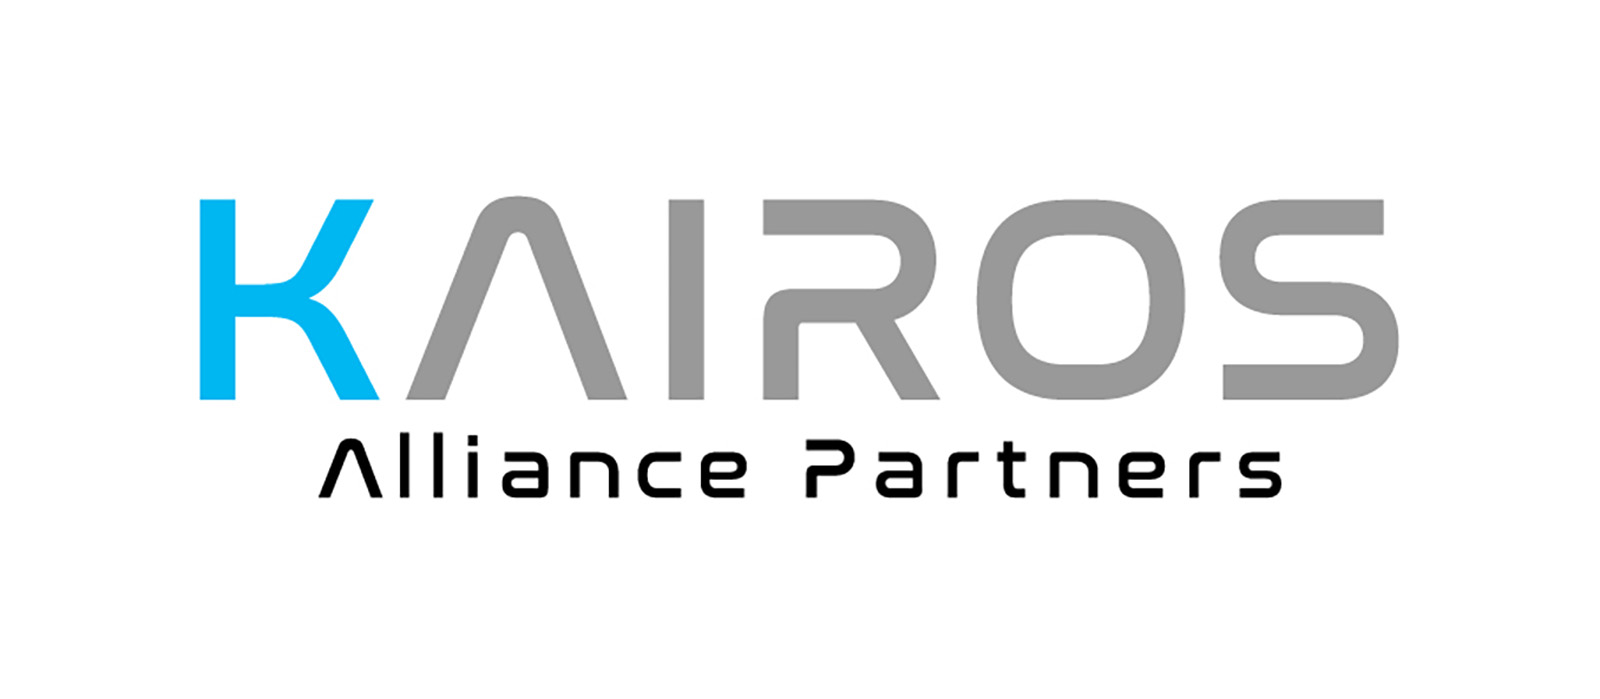 image:KAIROS Alliance Partners